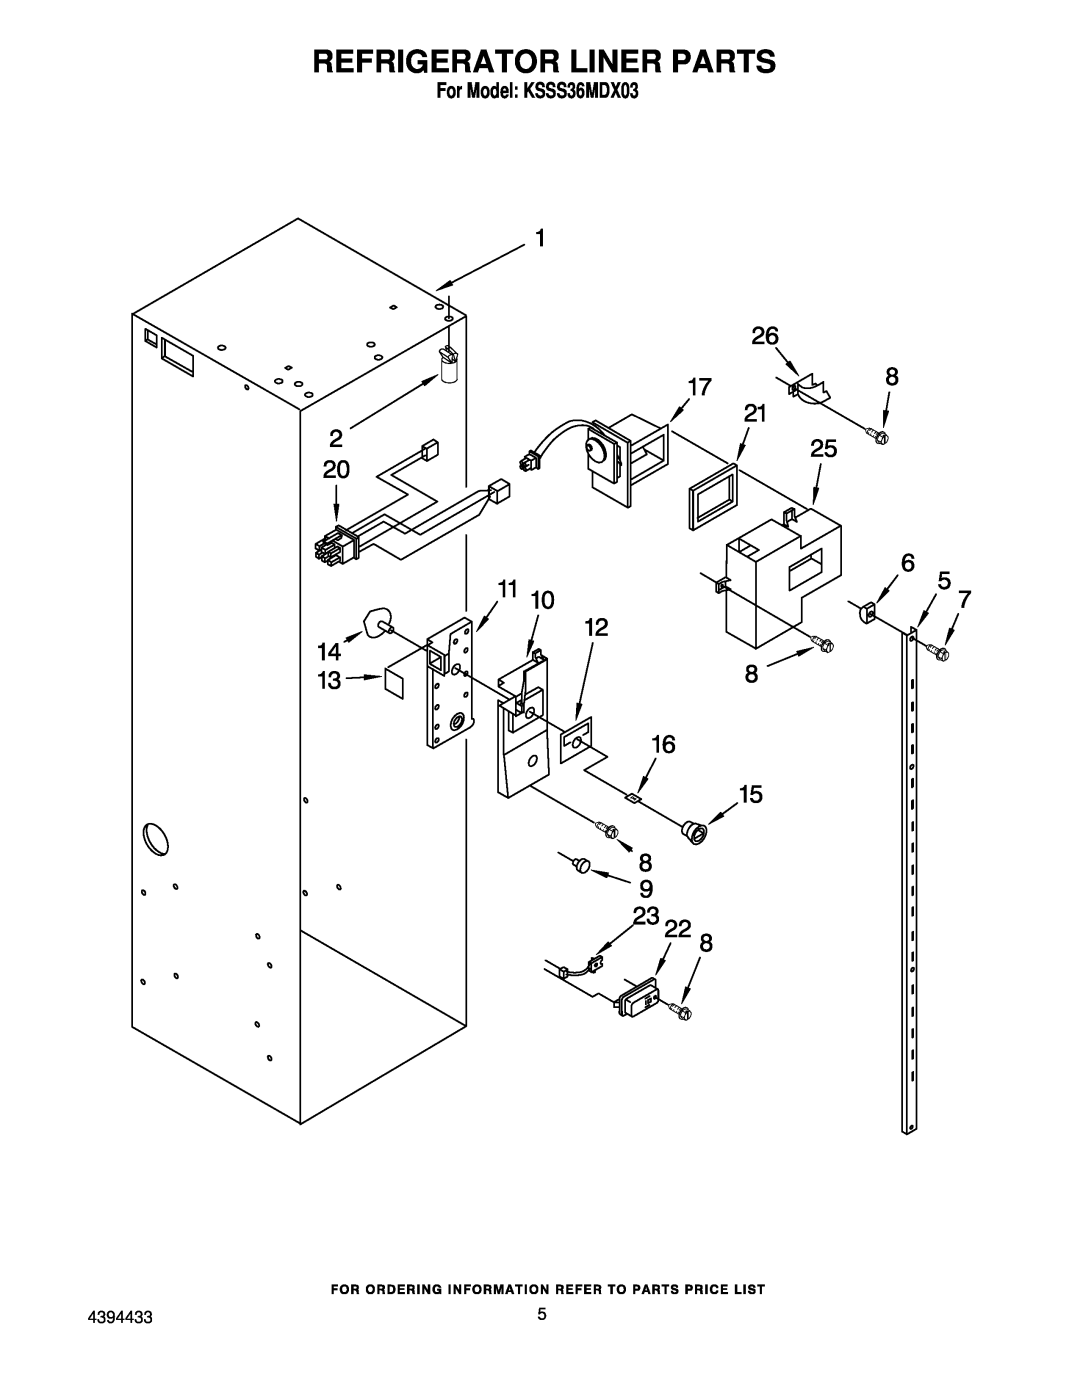 KitchenAid manual Refrigerator Liner Parts, For Model KSSS36MDX03 